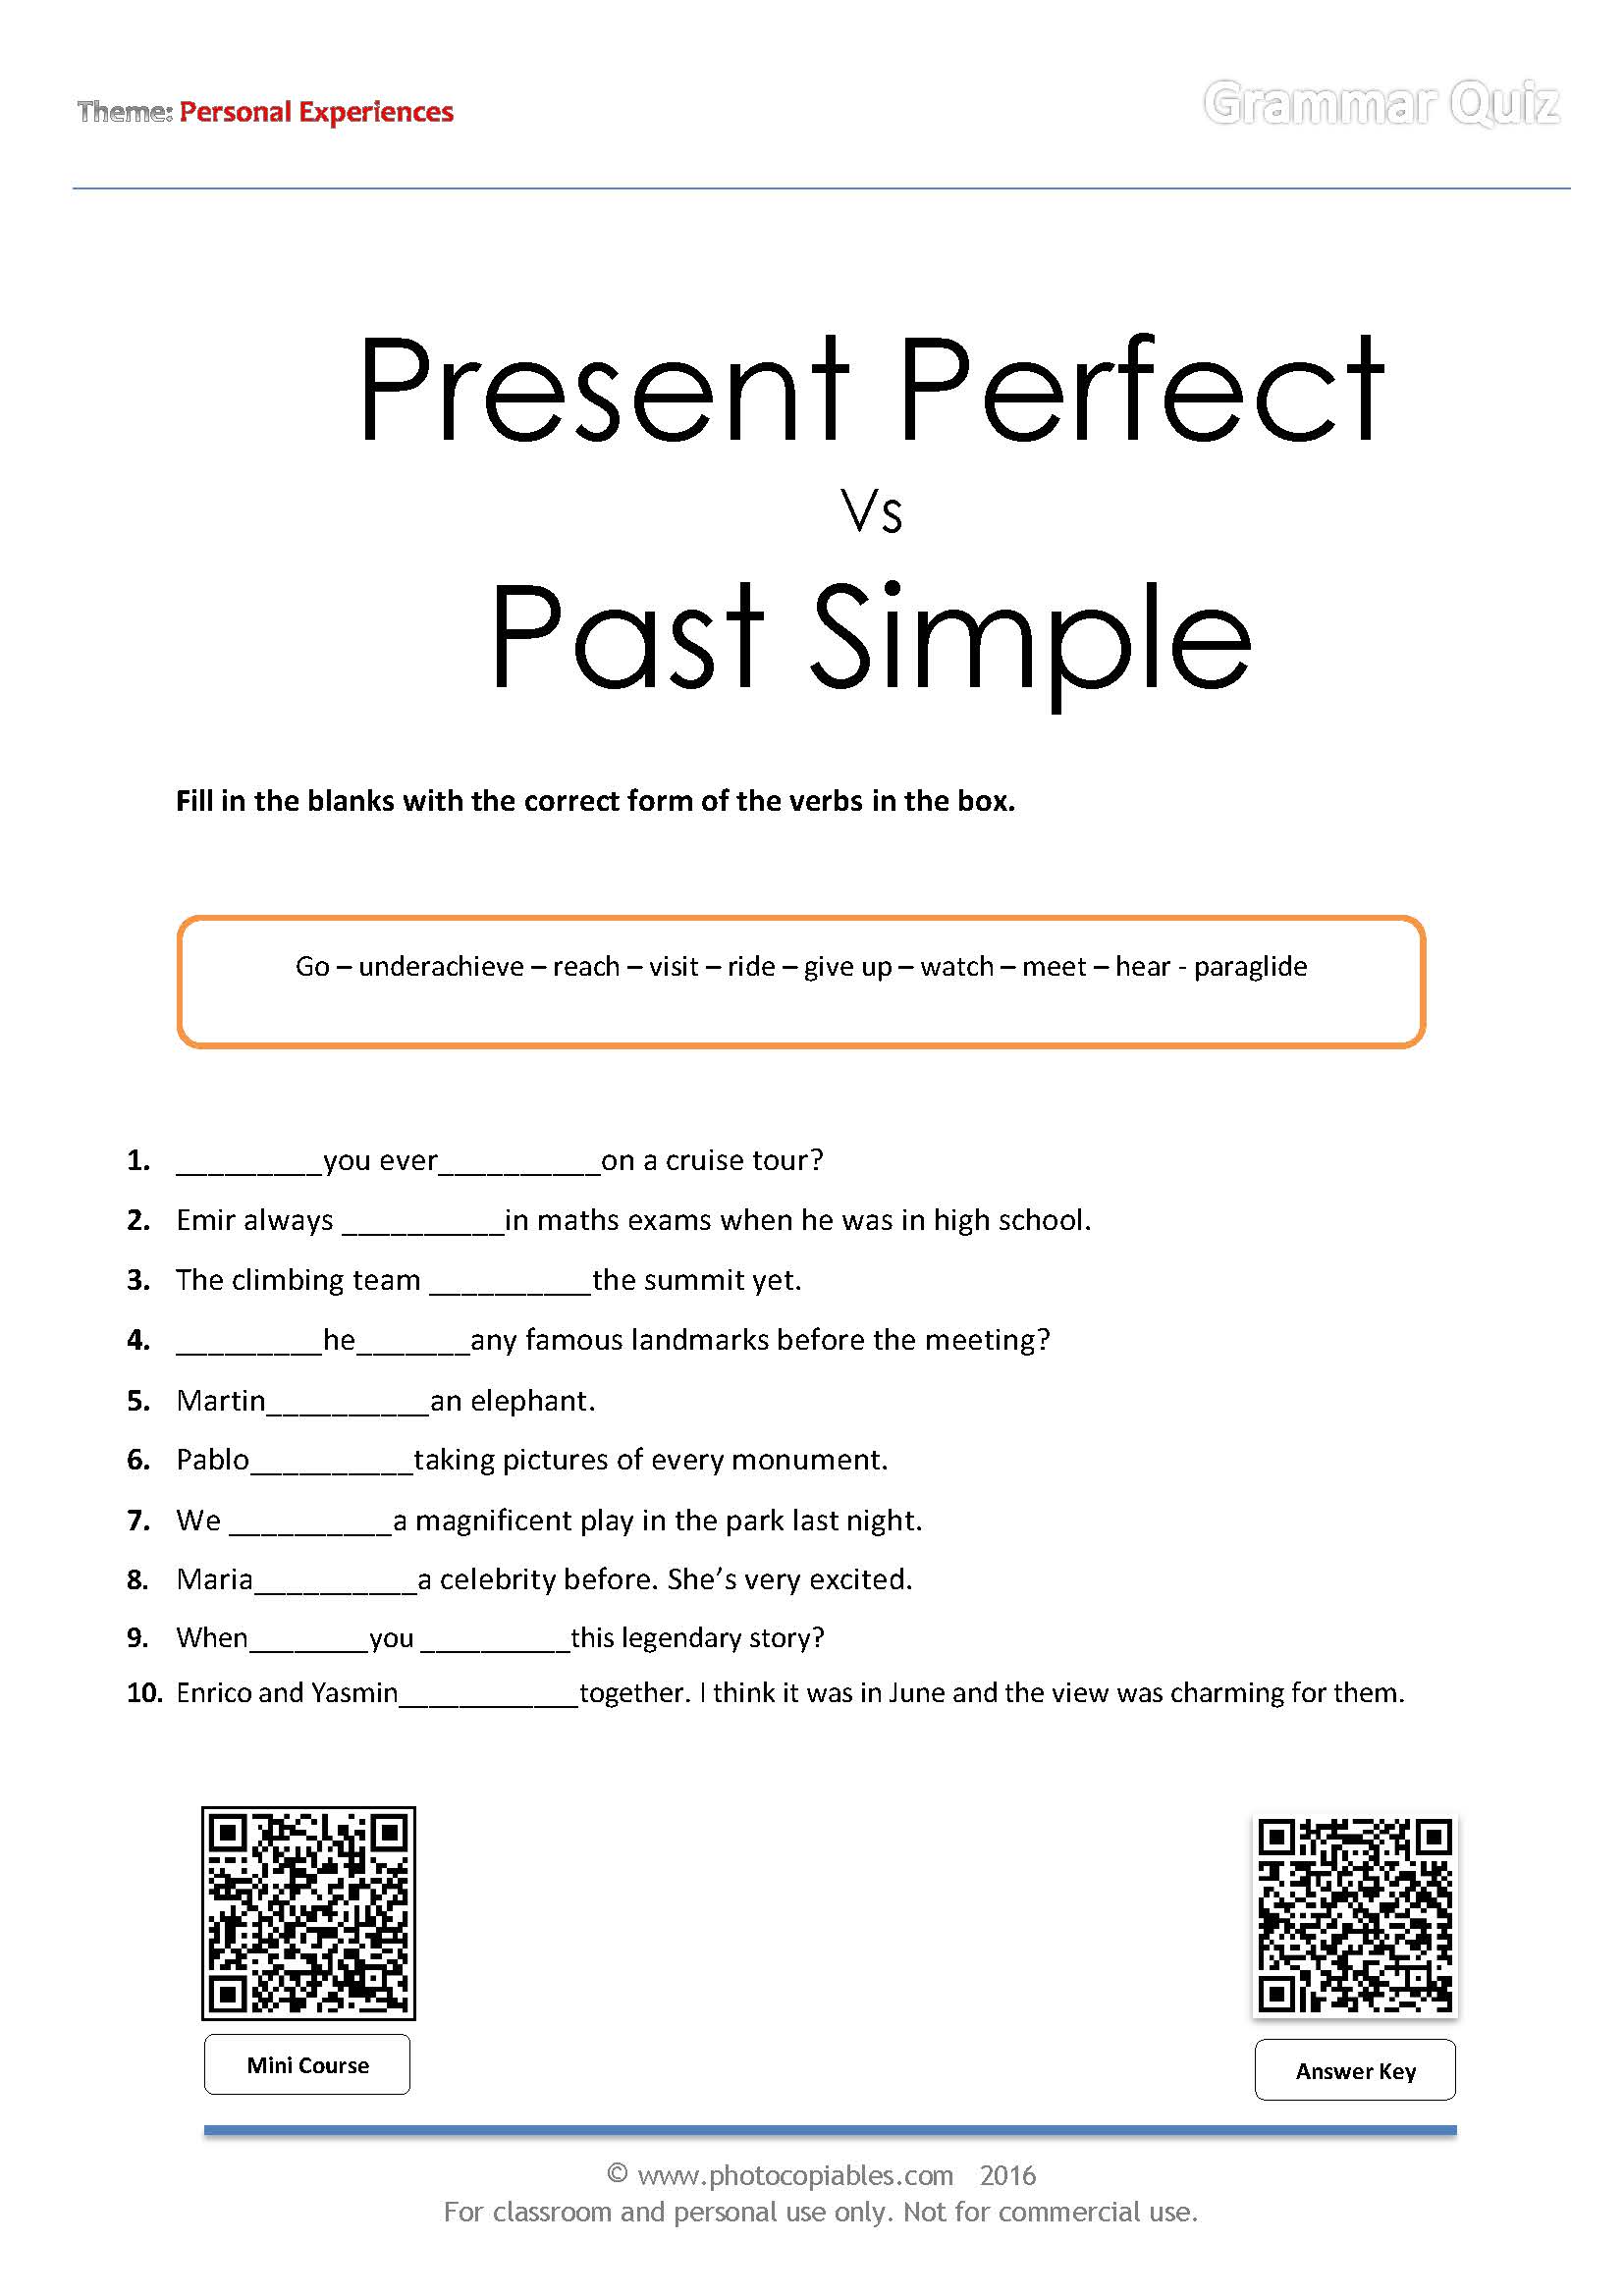 present-perfect-vs-past-simple-grammar-quiz-photocopiables